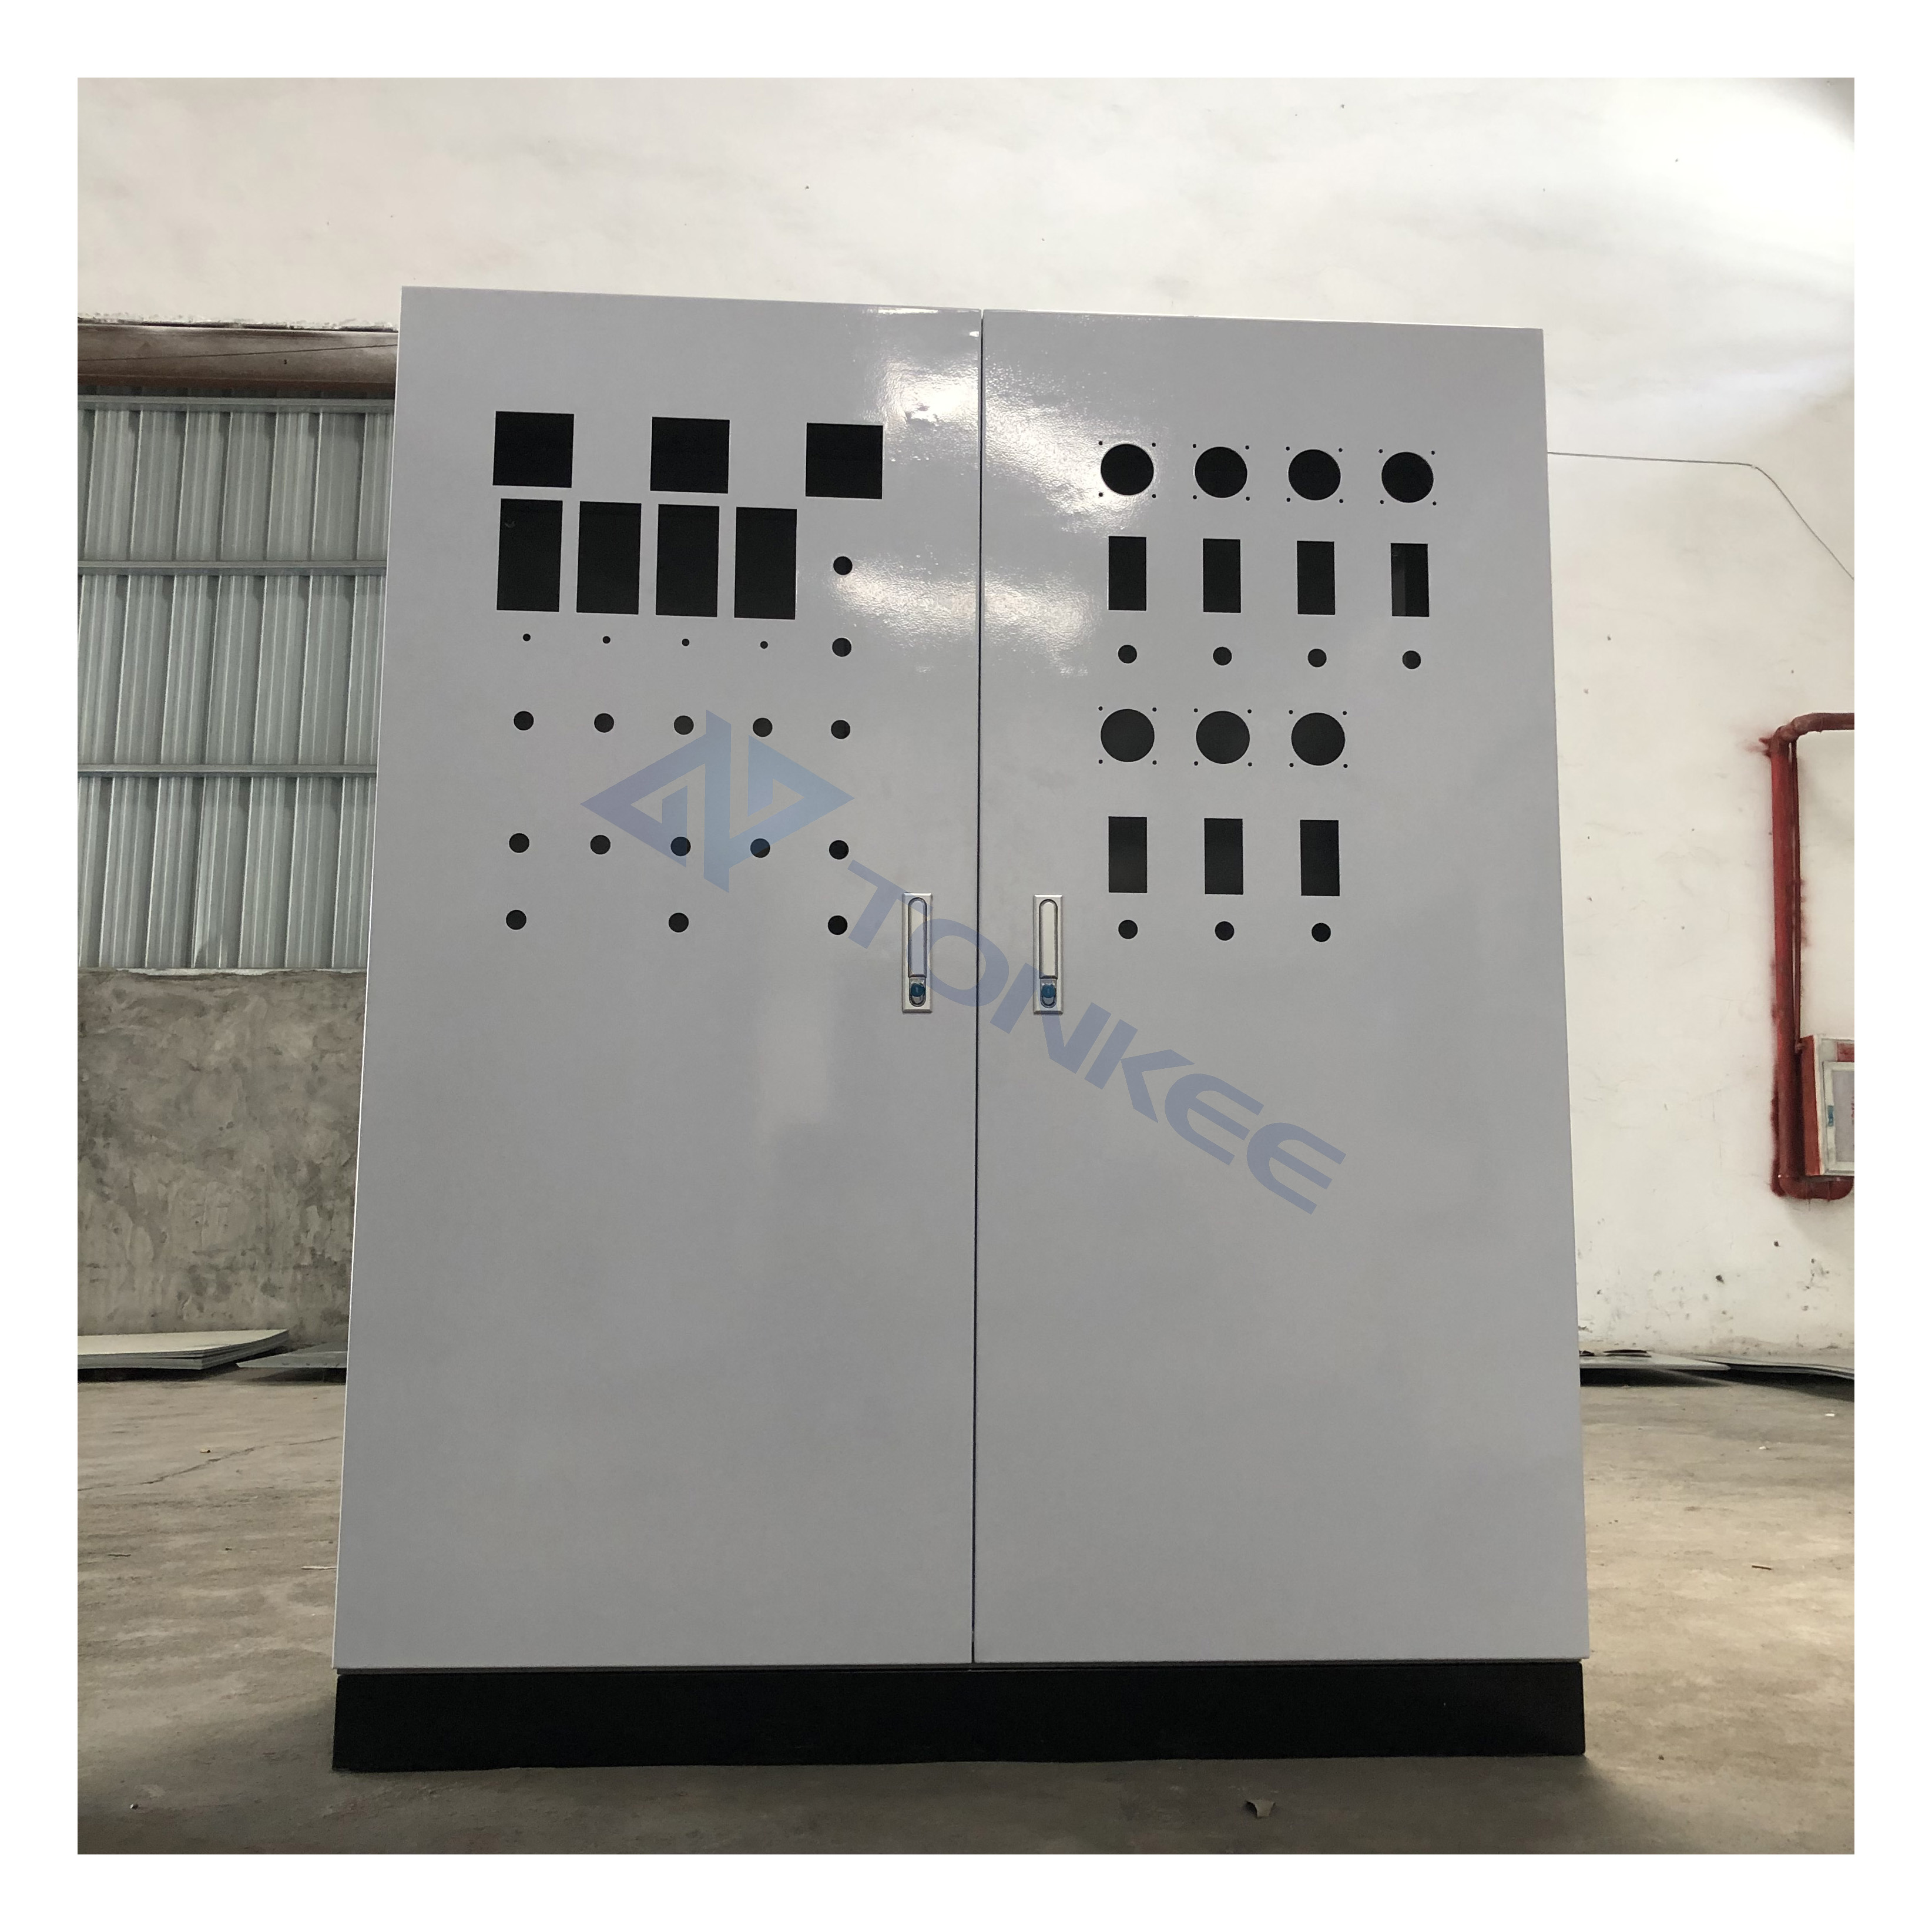 MCC VFD PLC control board electrical box enclosure panel boards electrical control cabinet